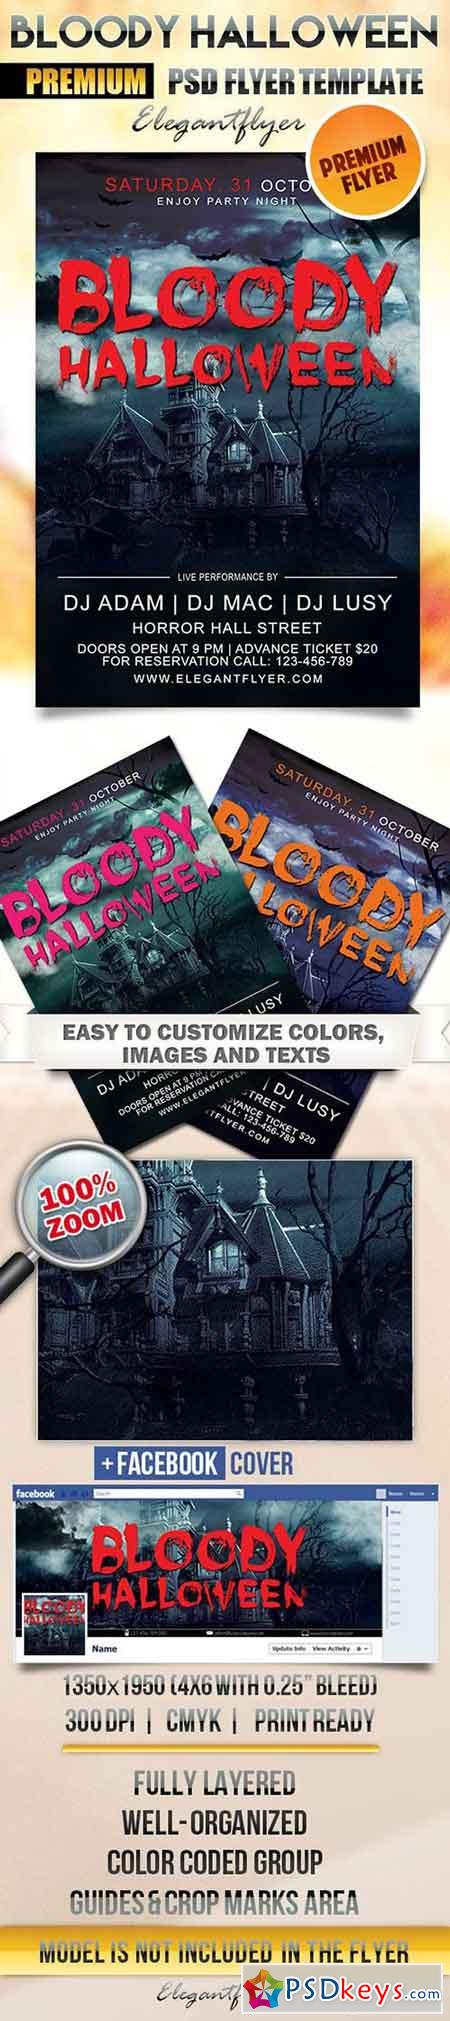 Bloody Halloween Flyer PSD Template + Facebook Cover